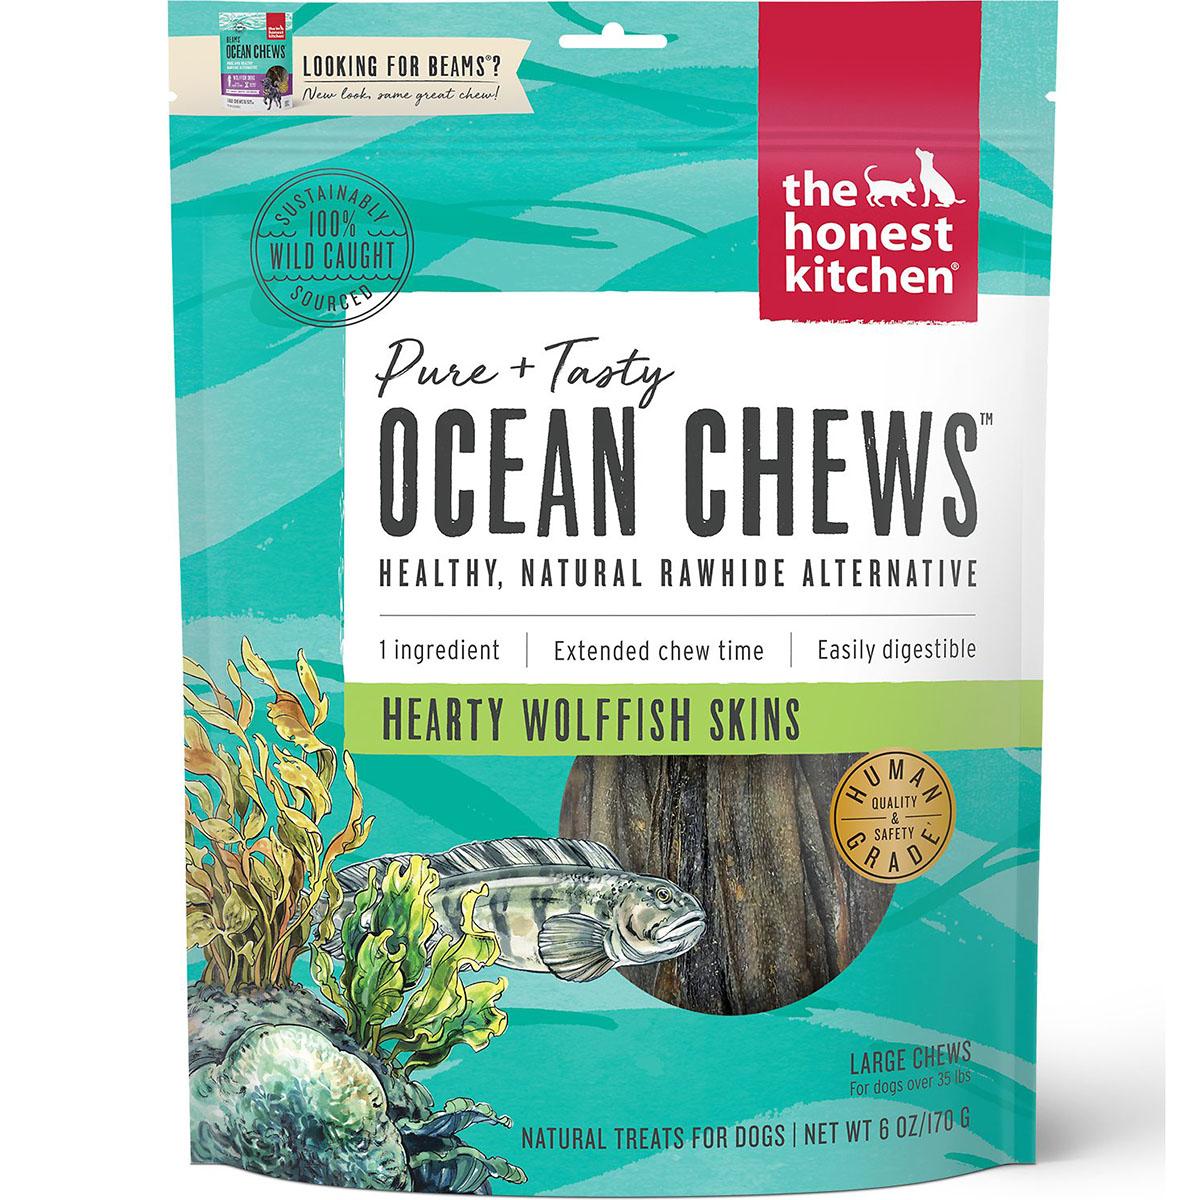 The Honest Kitchen Beams Ocean Chews Dog Treats - Wolffish